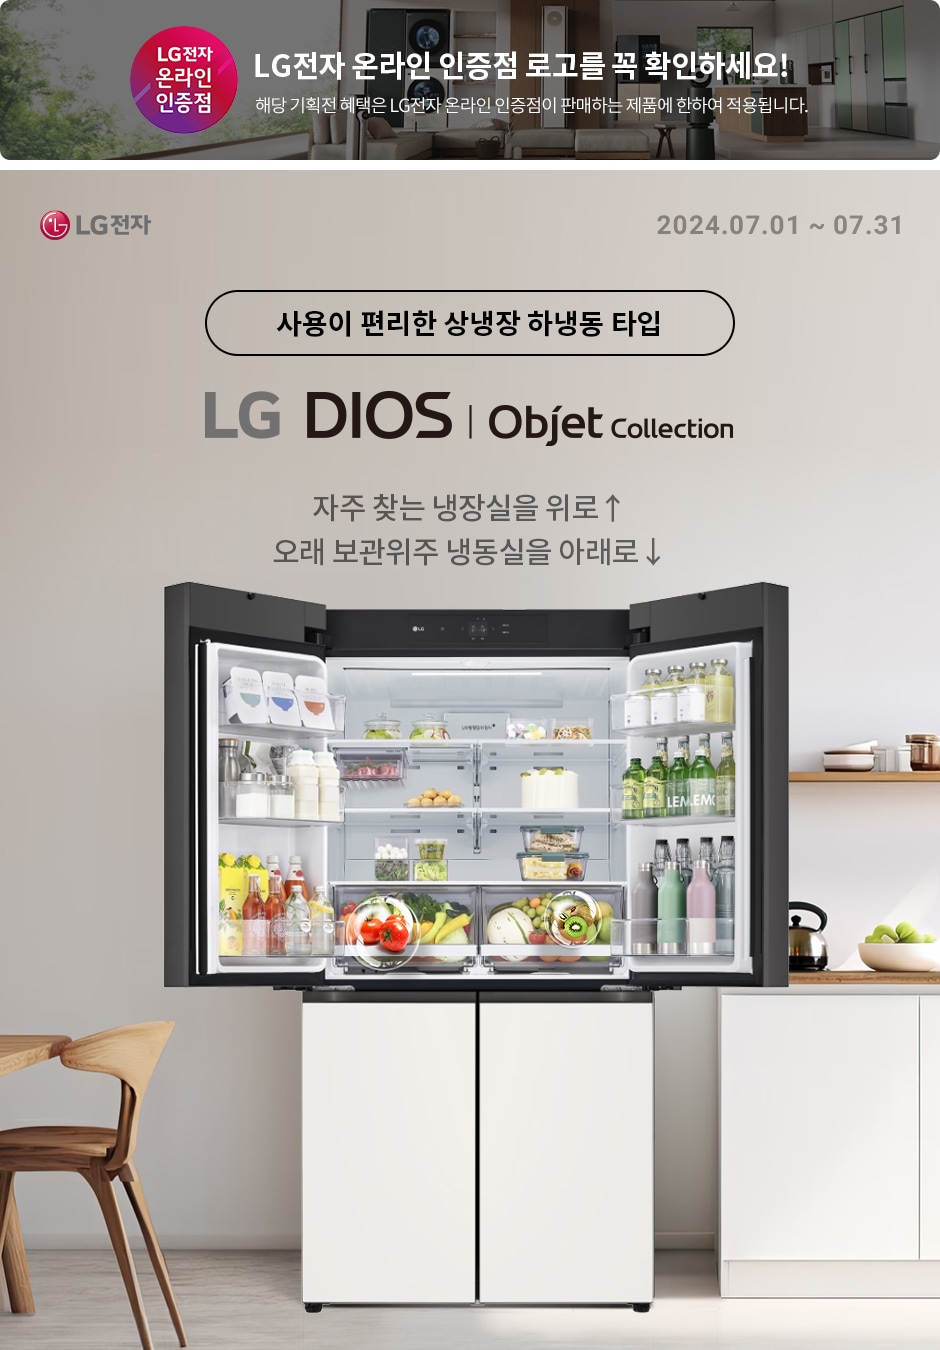 [LG전자] LG DIOS 냉장고의 편리함! 자주 찾는 냉장실을 위로↑ 오래 보관위주 냉동실을 아래로↓